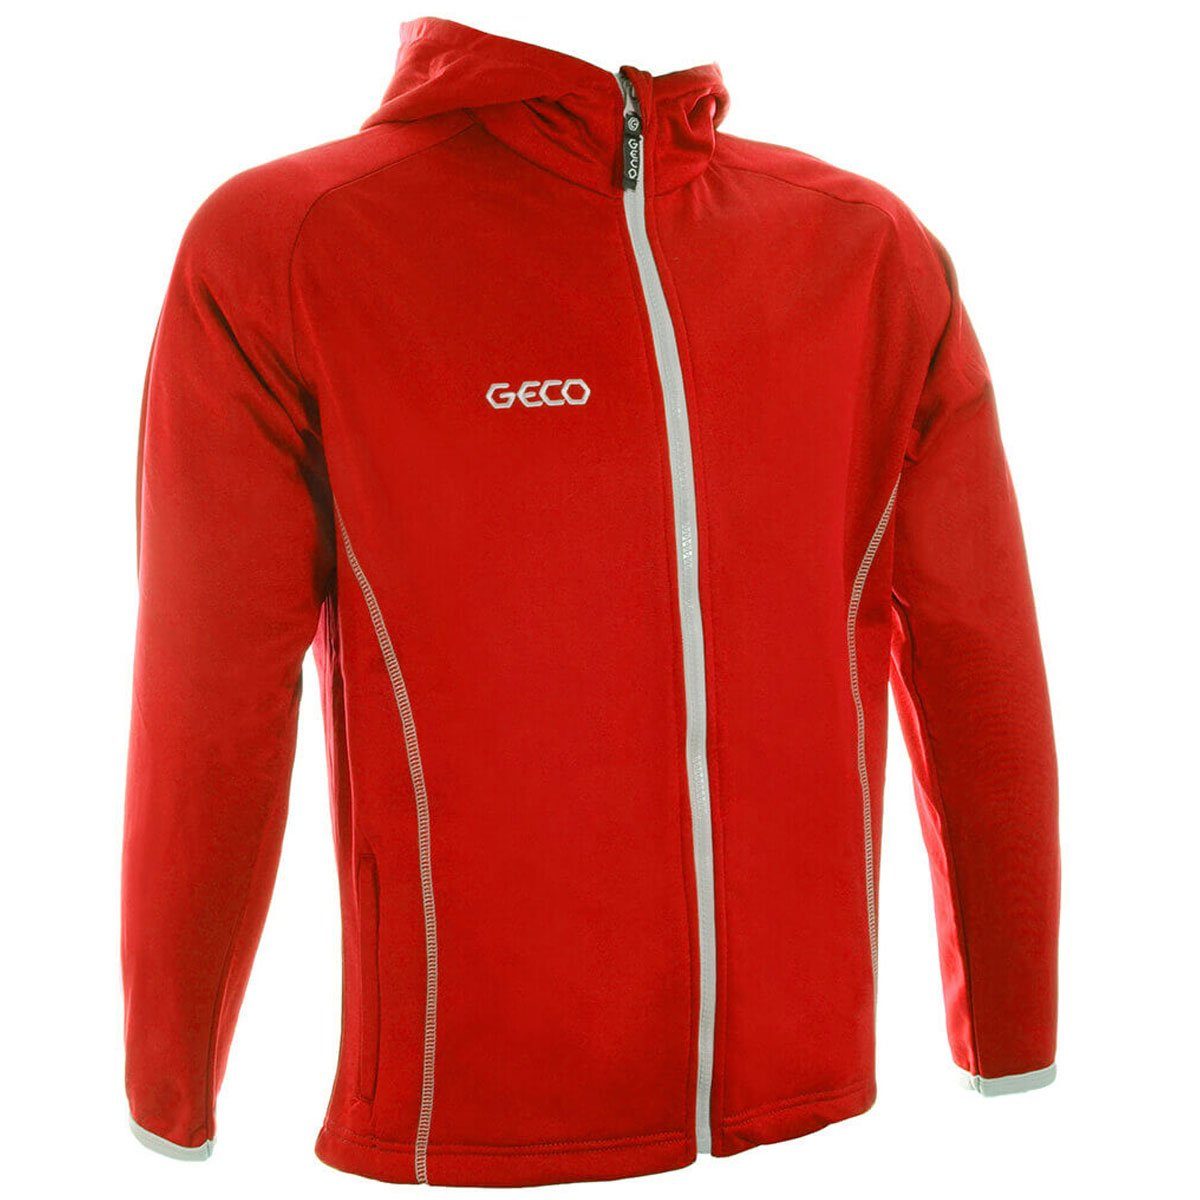 Geco mit Trainingsjacke Kapuze Trainingsjacke Sportswear Präsentationsjacke Hurrican Fußball rot Geco